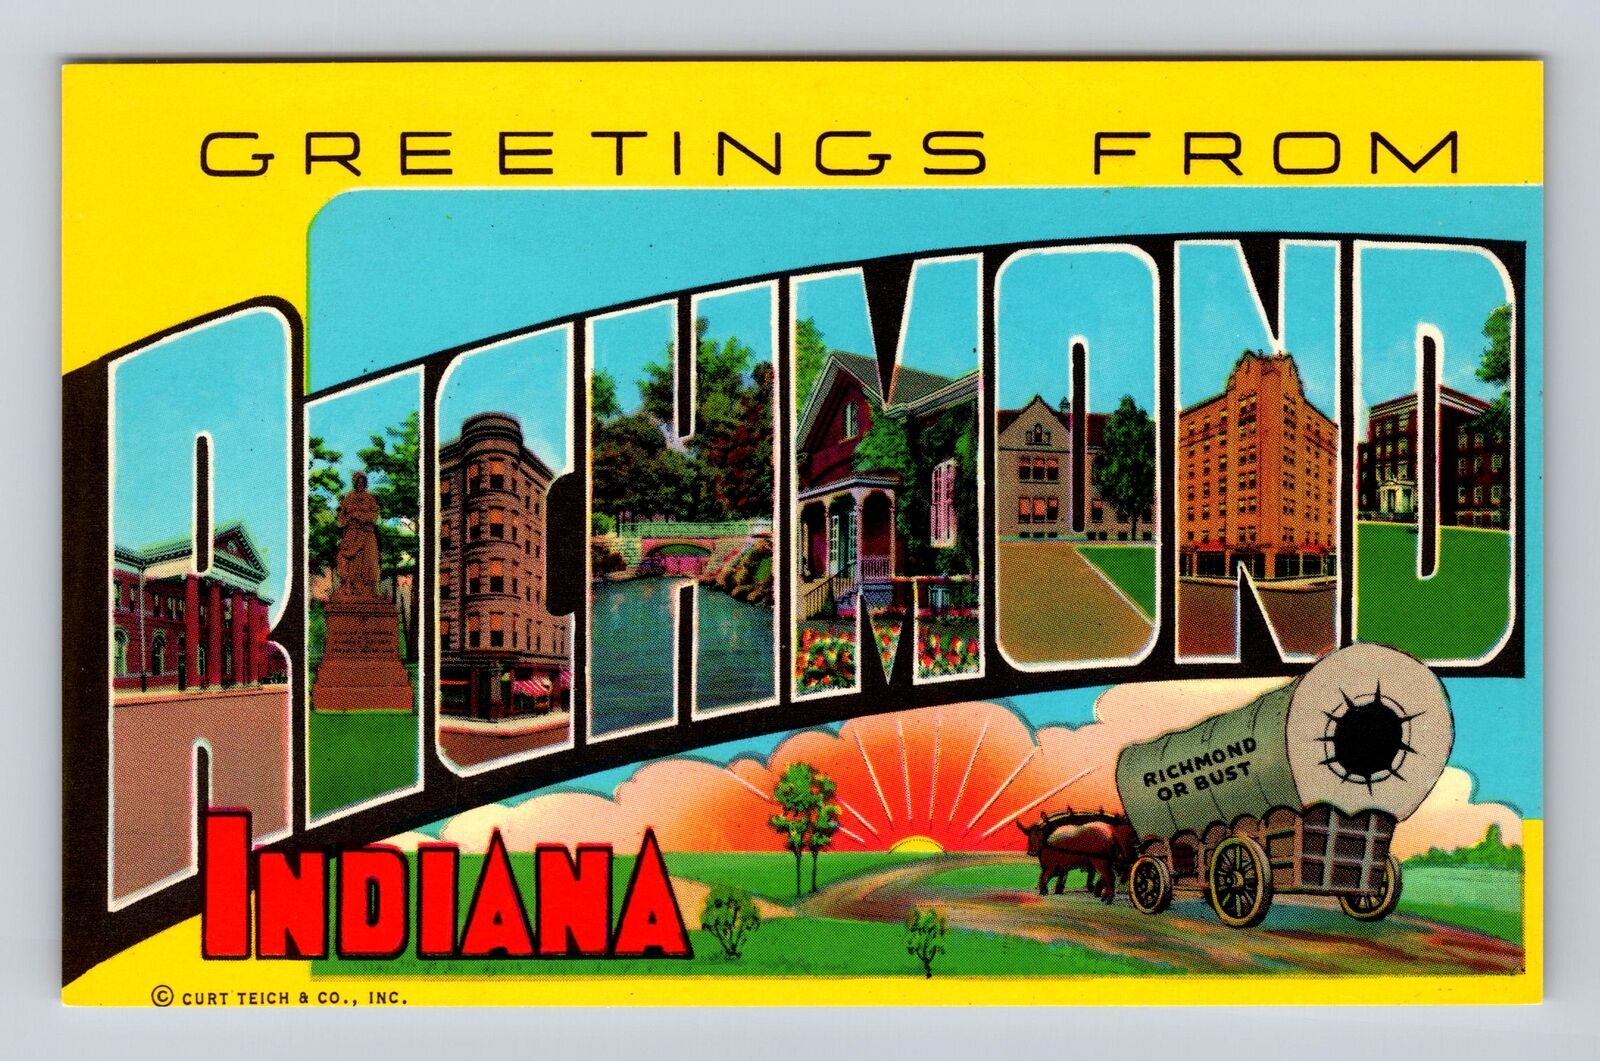 Richmond IN-Indiana, LARGE LETTER Greetings, Antique, Vintage Souvenir Postcard